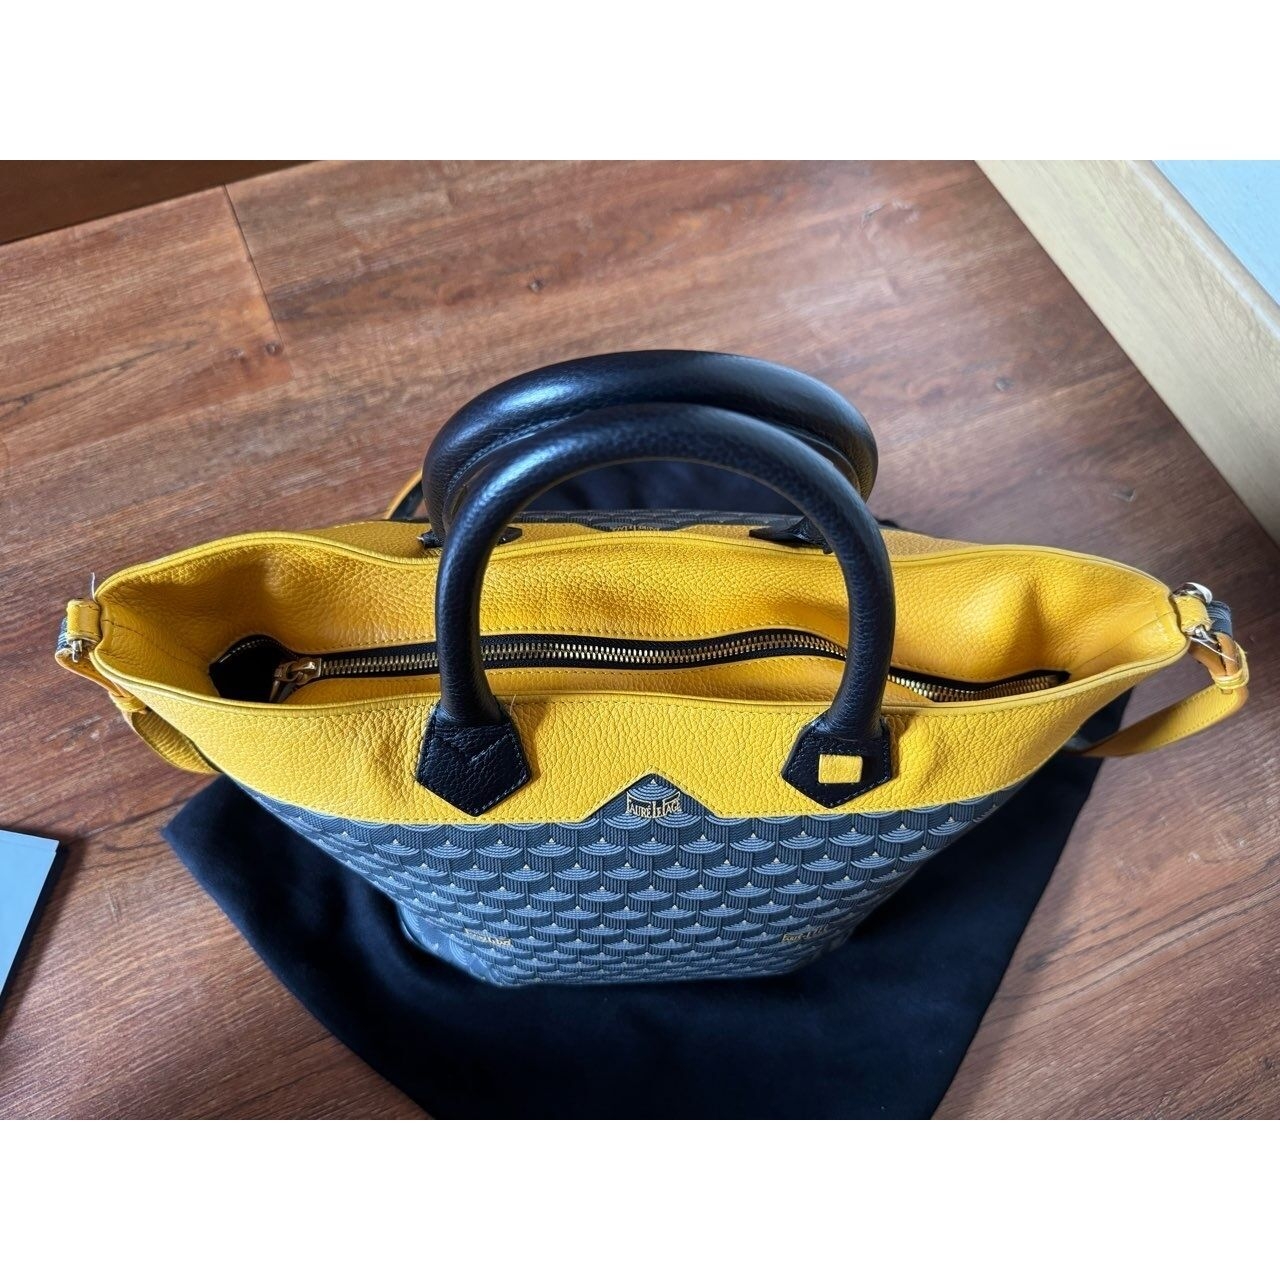 Faure Le Page Grey & Yellow Handbag